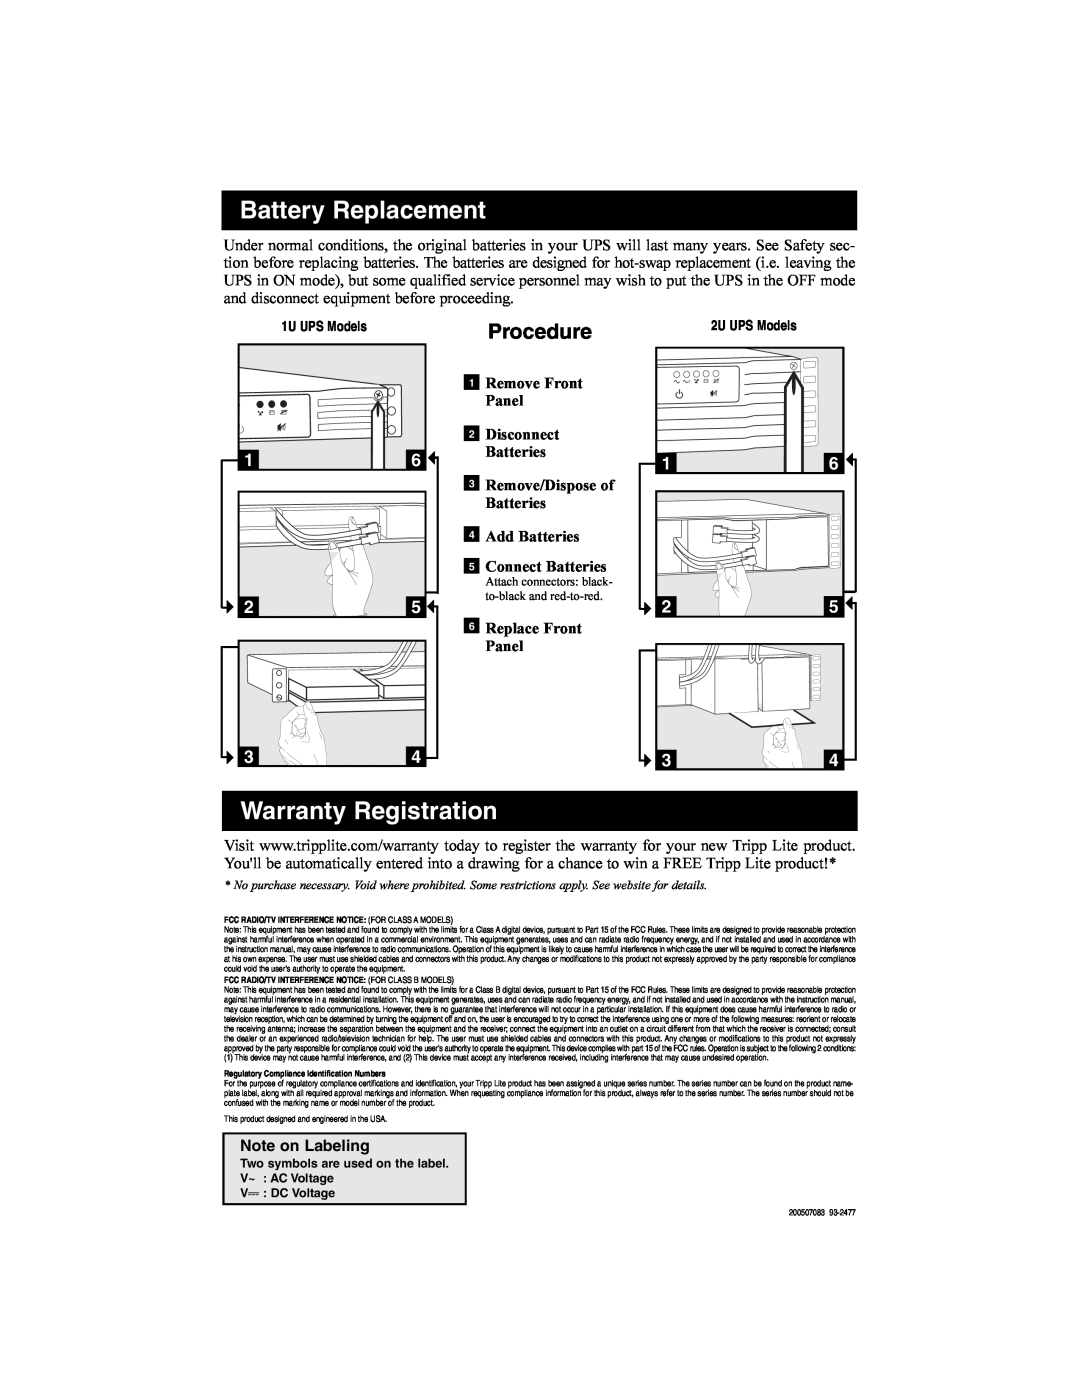 Tripp Lite 2POSTRMKITWM Procedure, Battery Replacement, Warranty Registration, Note on Labeling, 1U UPS Models, 200507083 